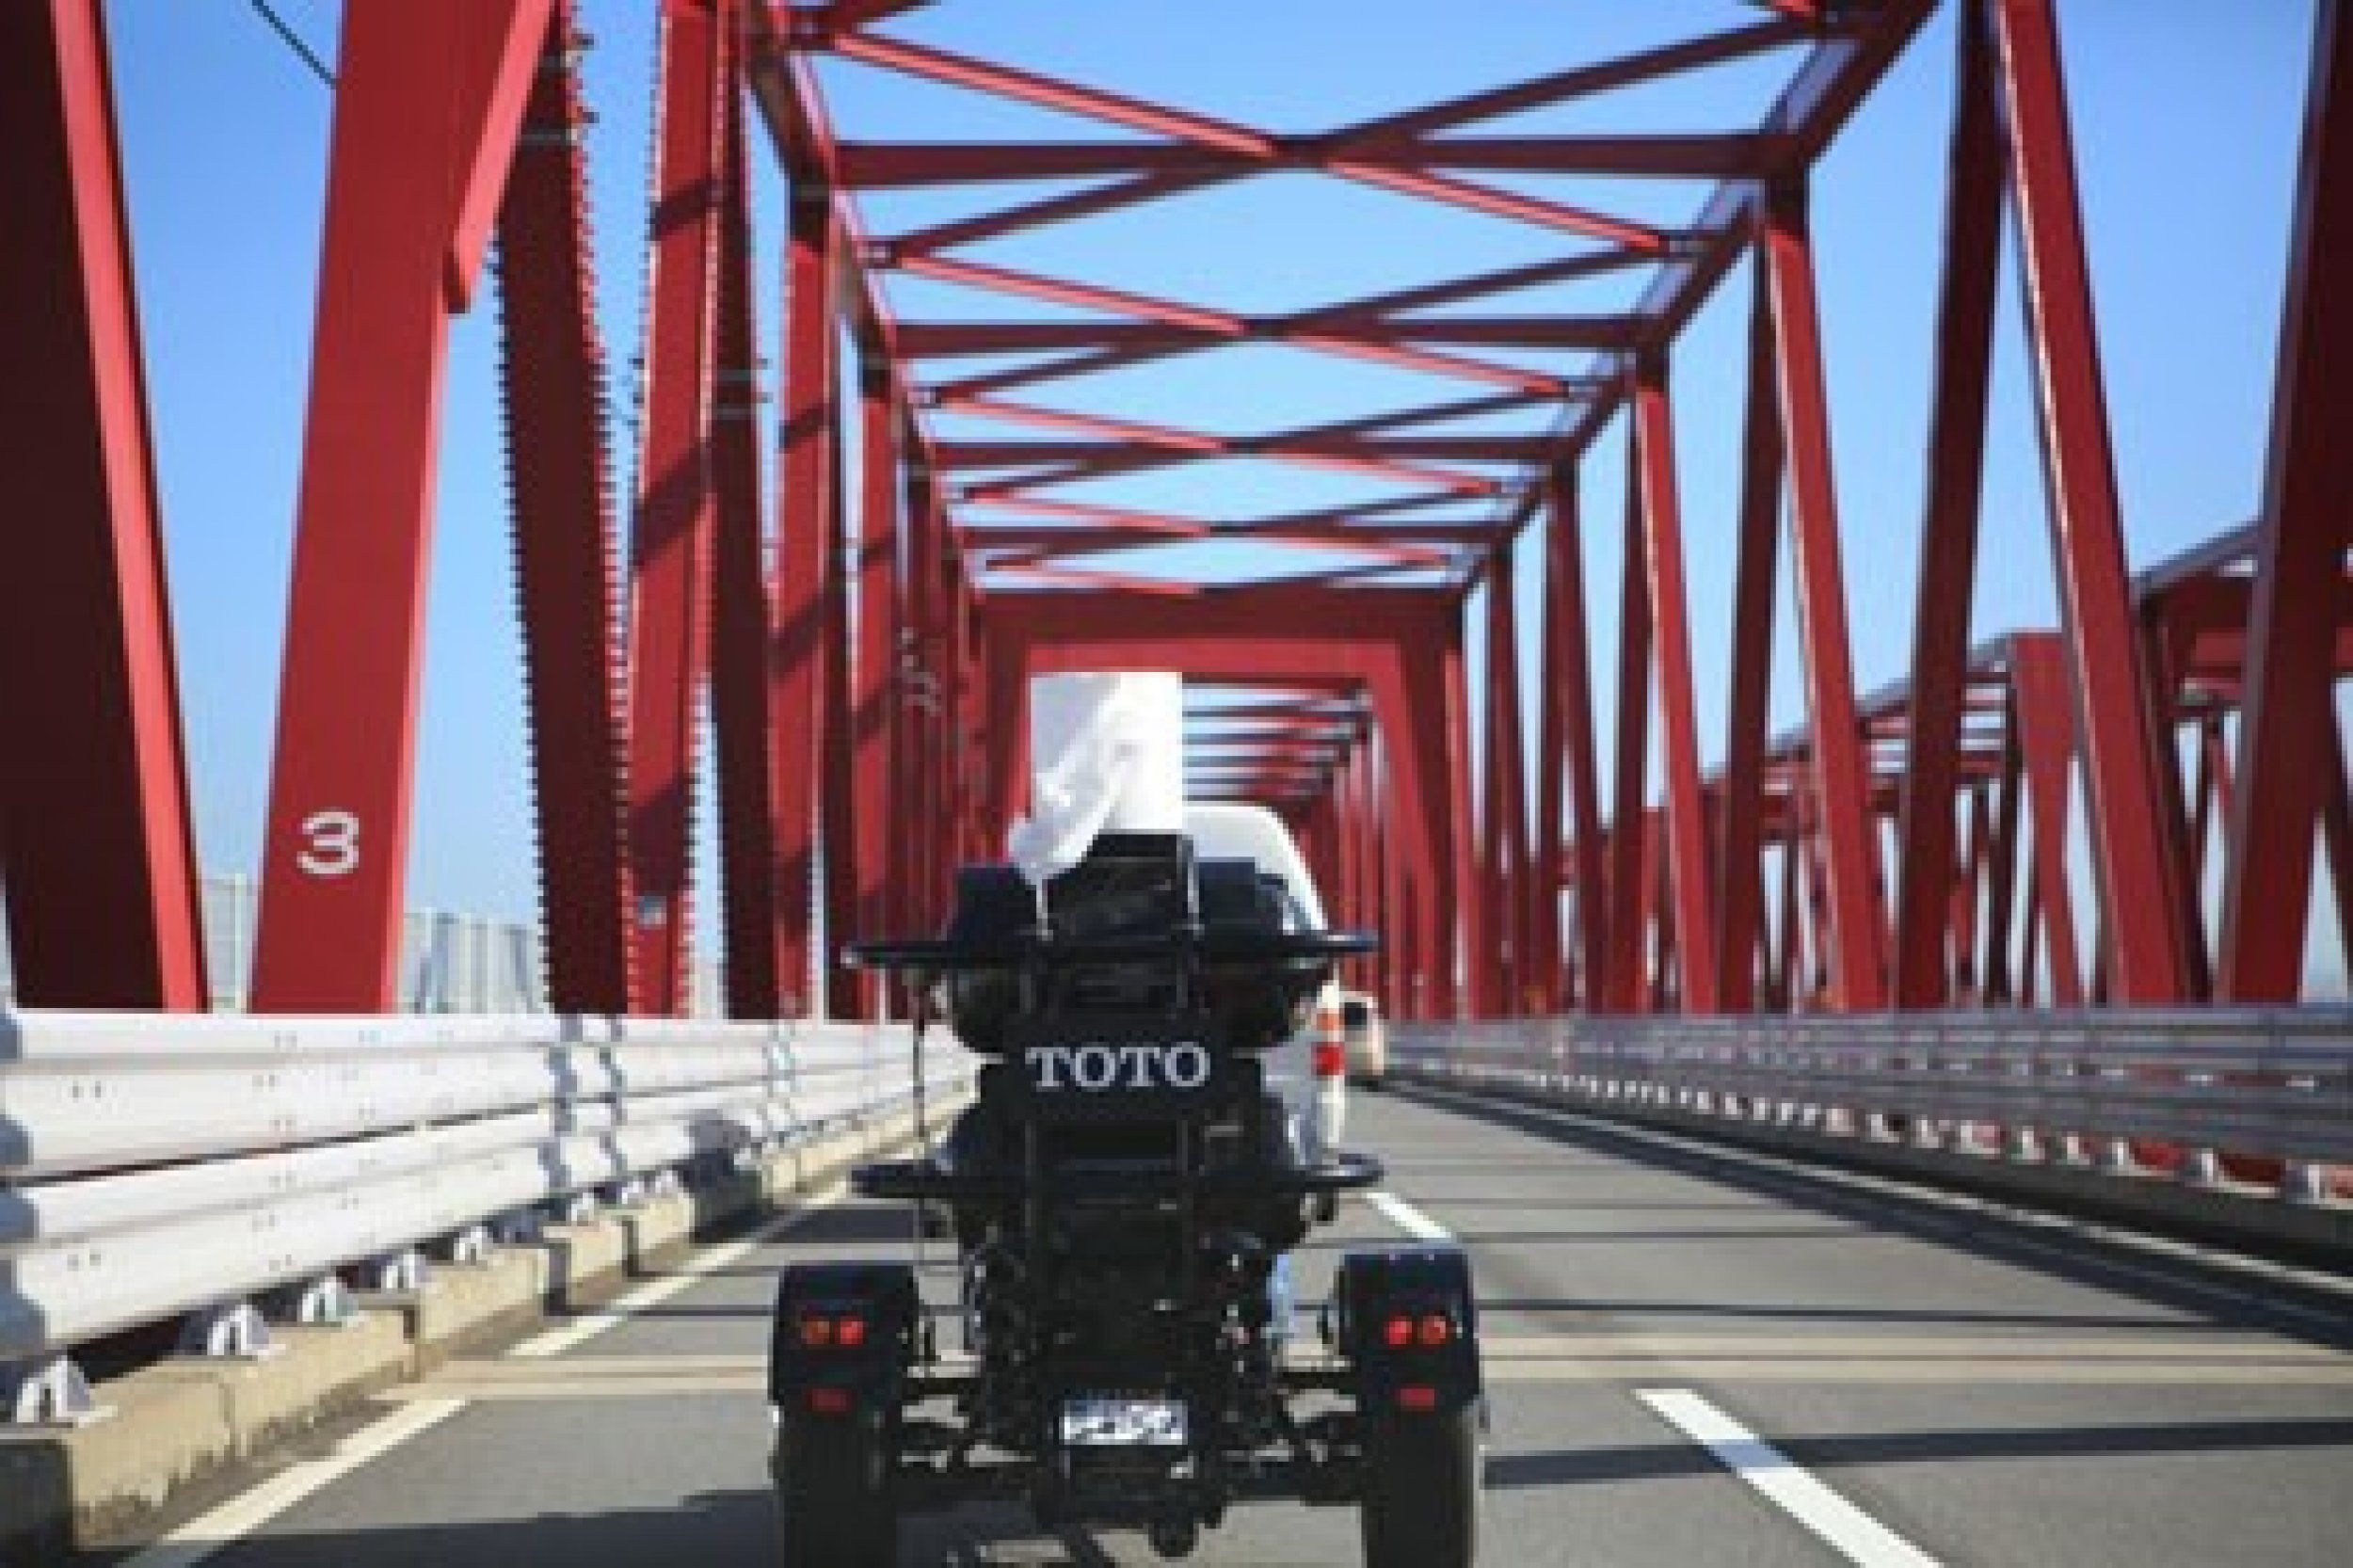 The Toilet Bike Neo crosses a bridge.